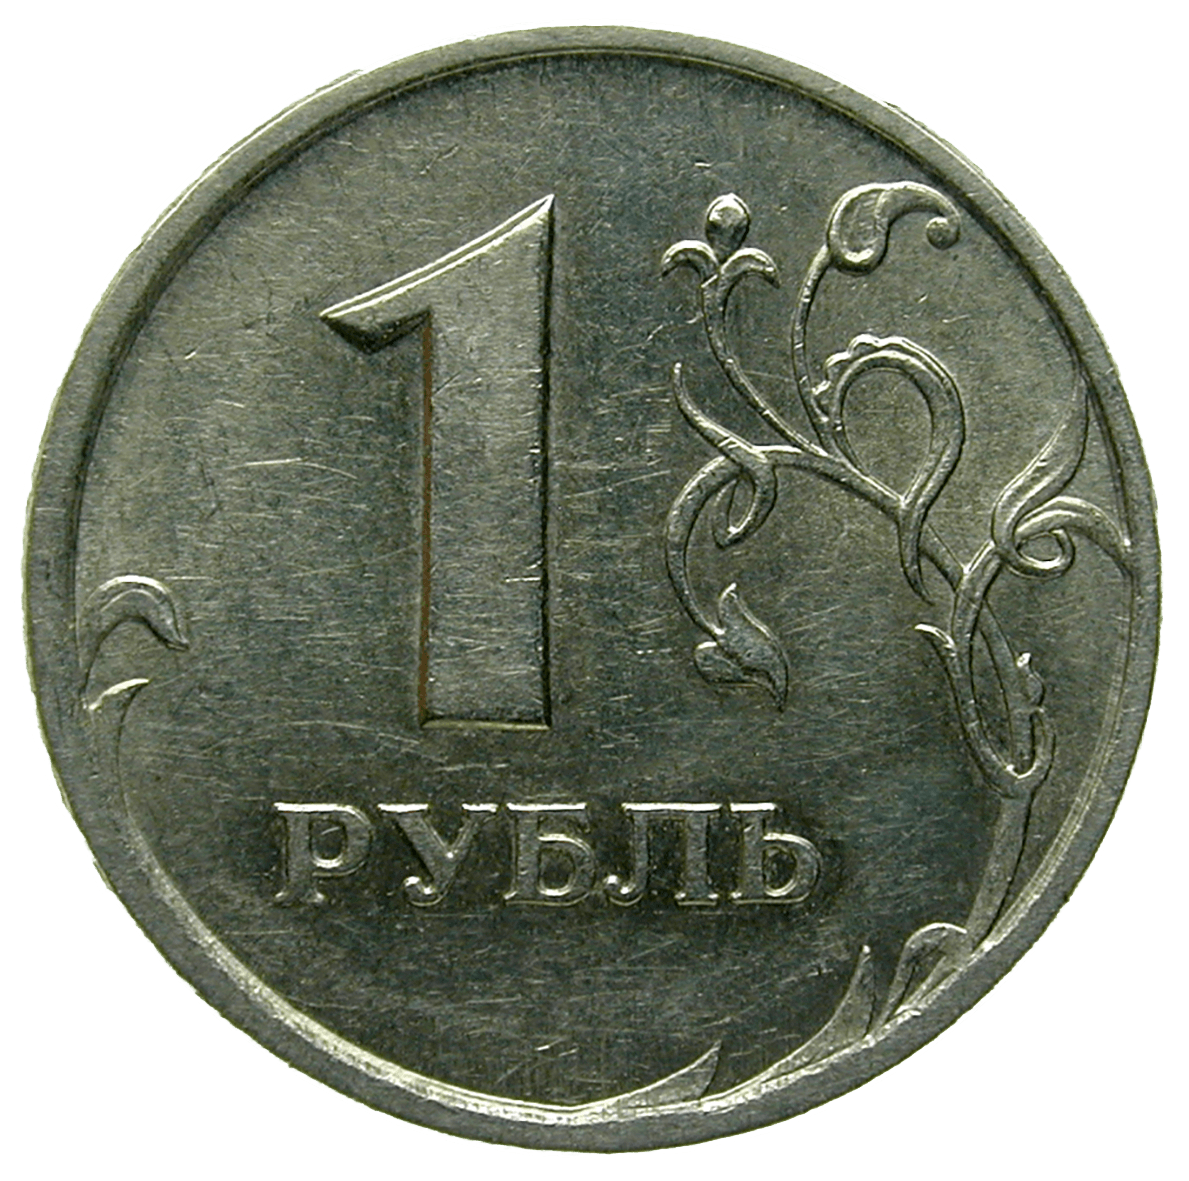 1 руб равно. Рубль. Монета 1 рубль на белом фоне. Деньги 1 рубль. Монеты рубли на белом фоне.